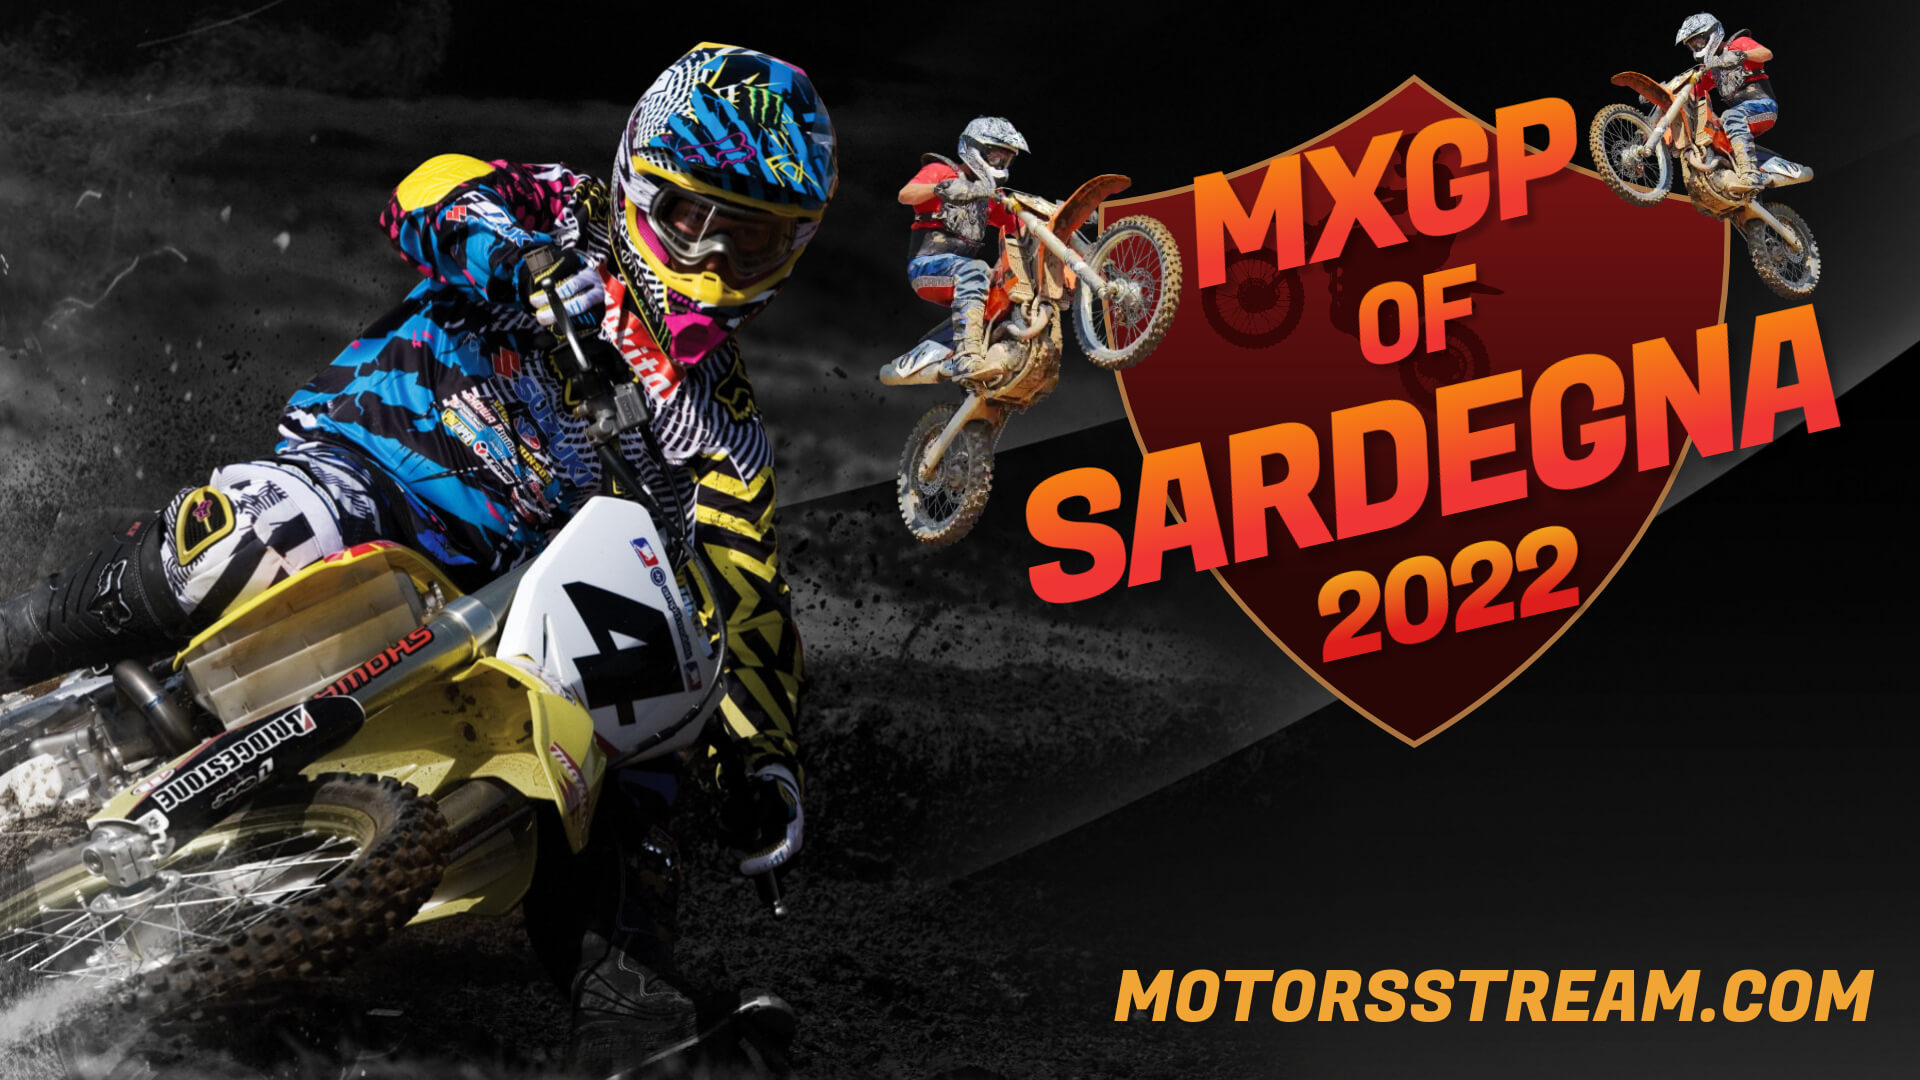 MXGP Of Sardegna Live Stream